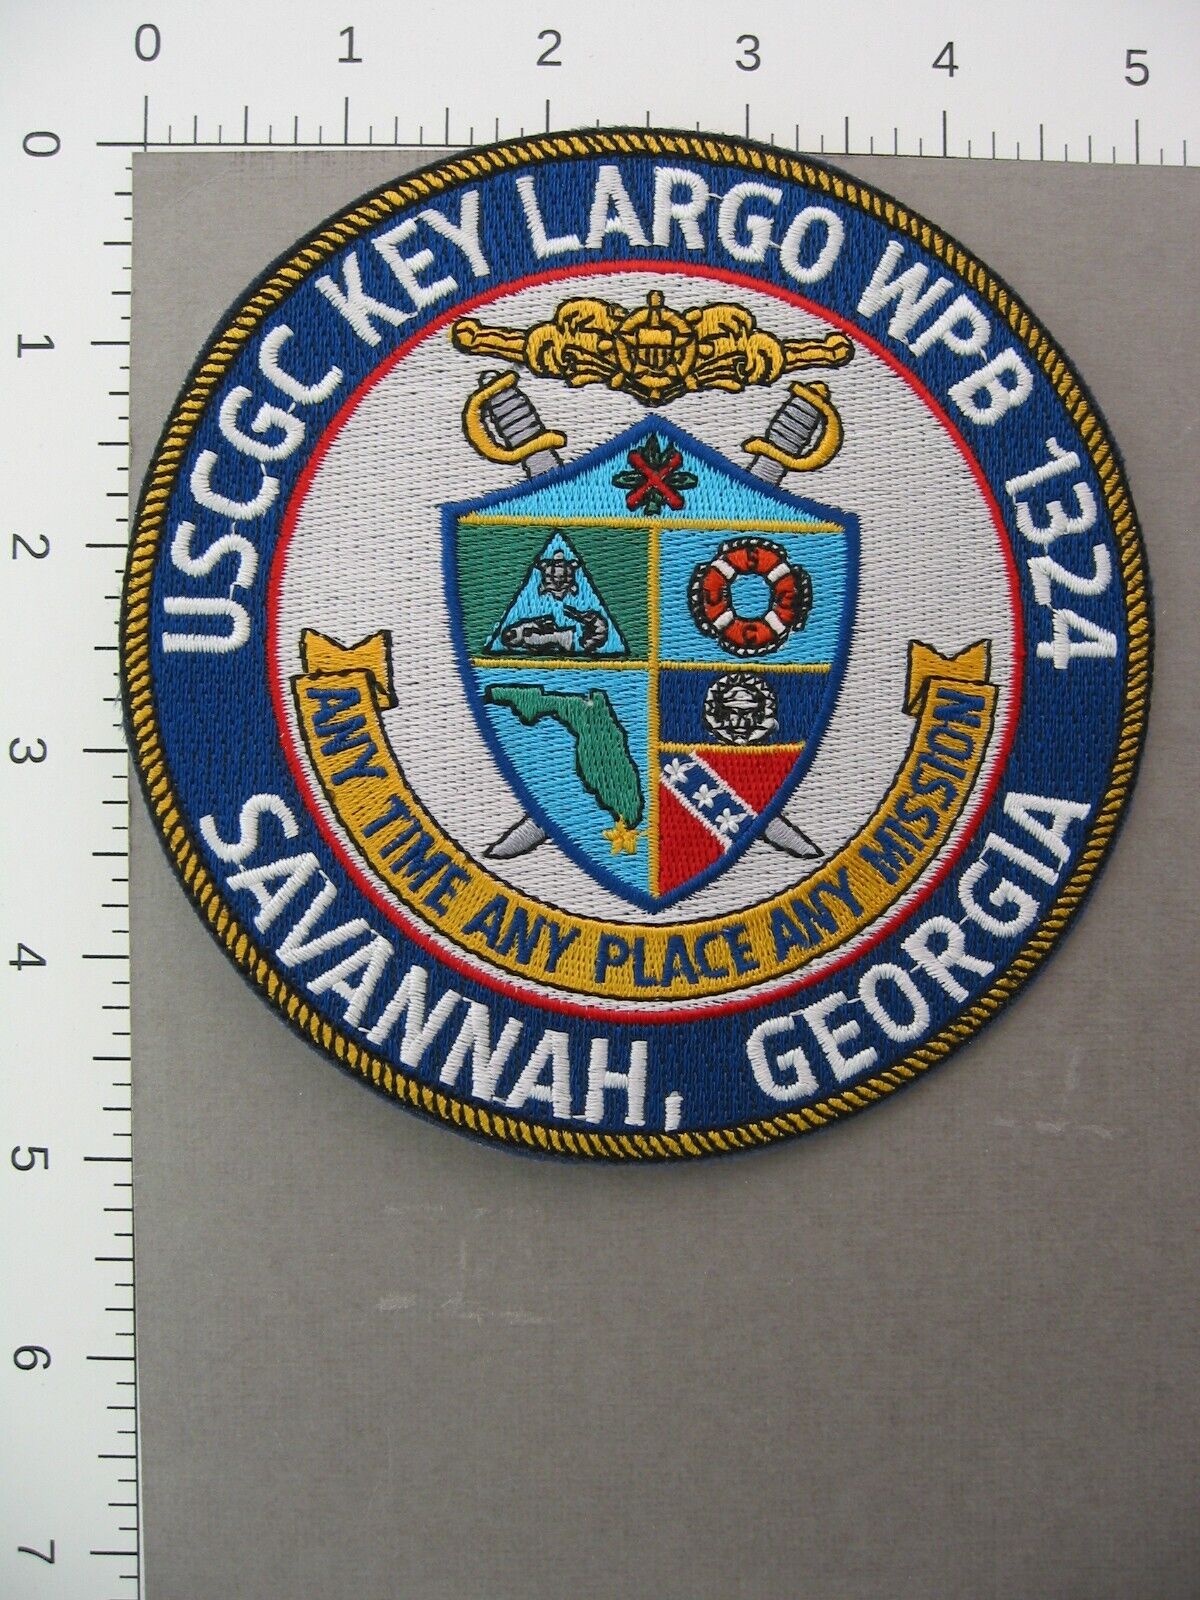 Georgia SAVANNAH USCGC KEY LARGO WPB 1324 Patch - United States Coast Guard